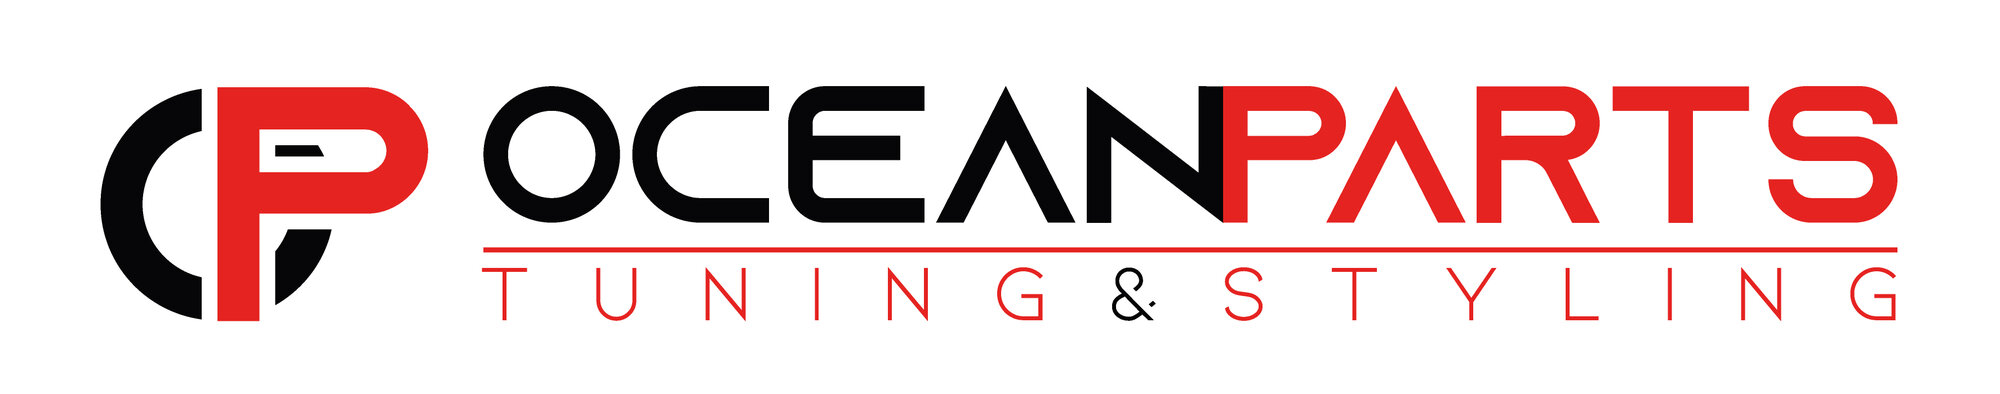 logo oceanparts webshop